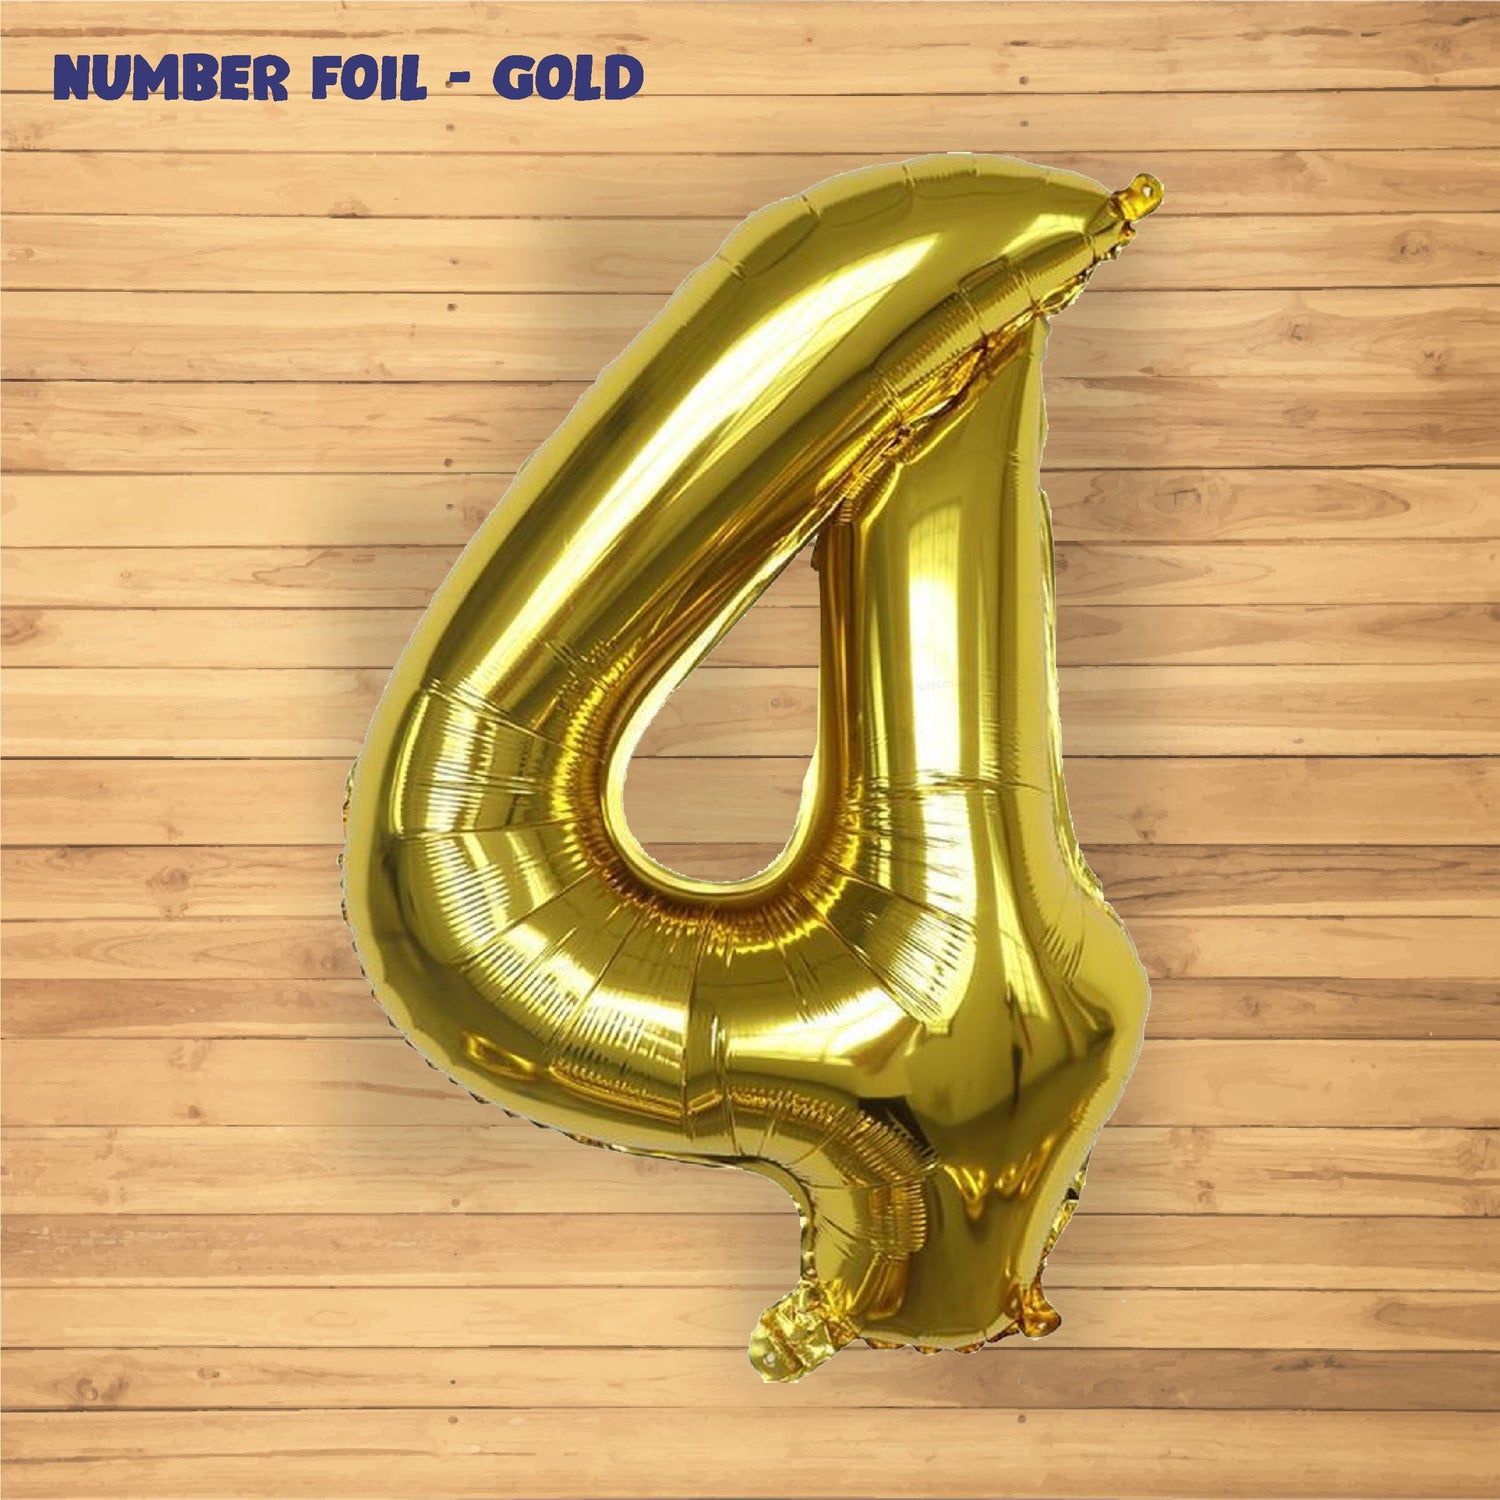 Number 4 Premium Gold Foil Balloon